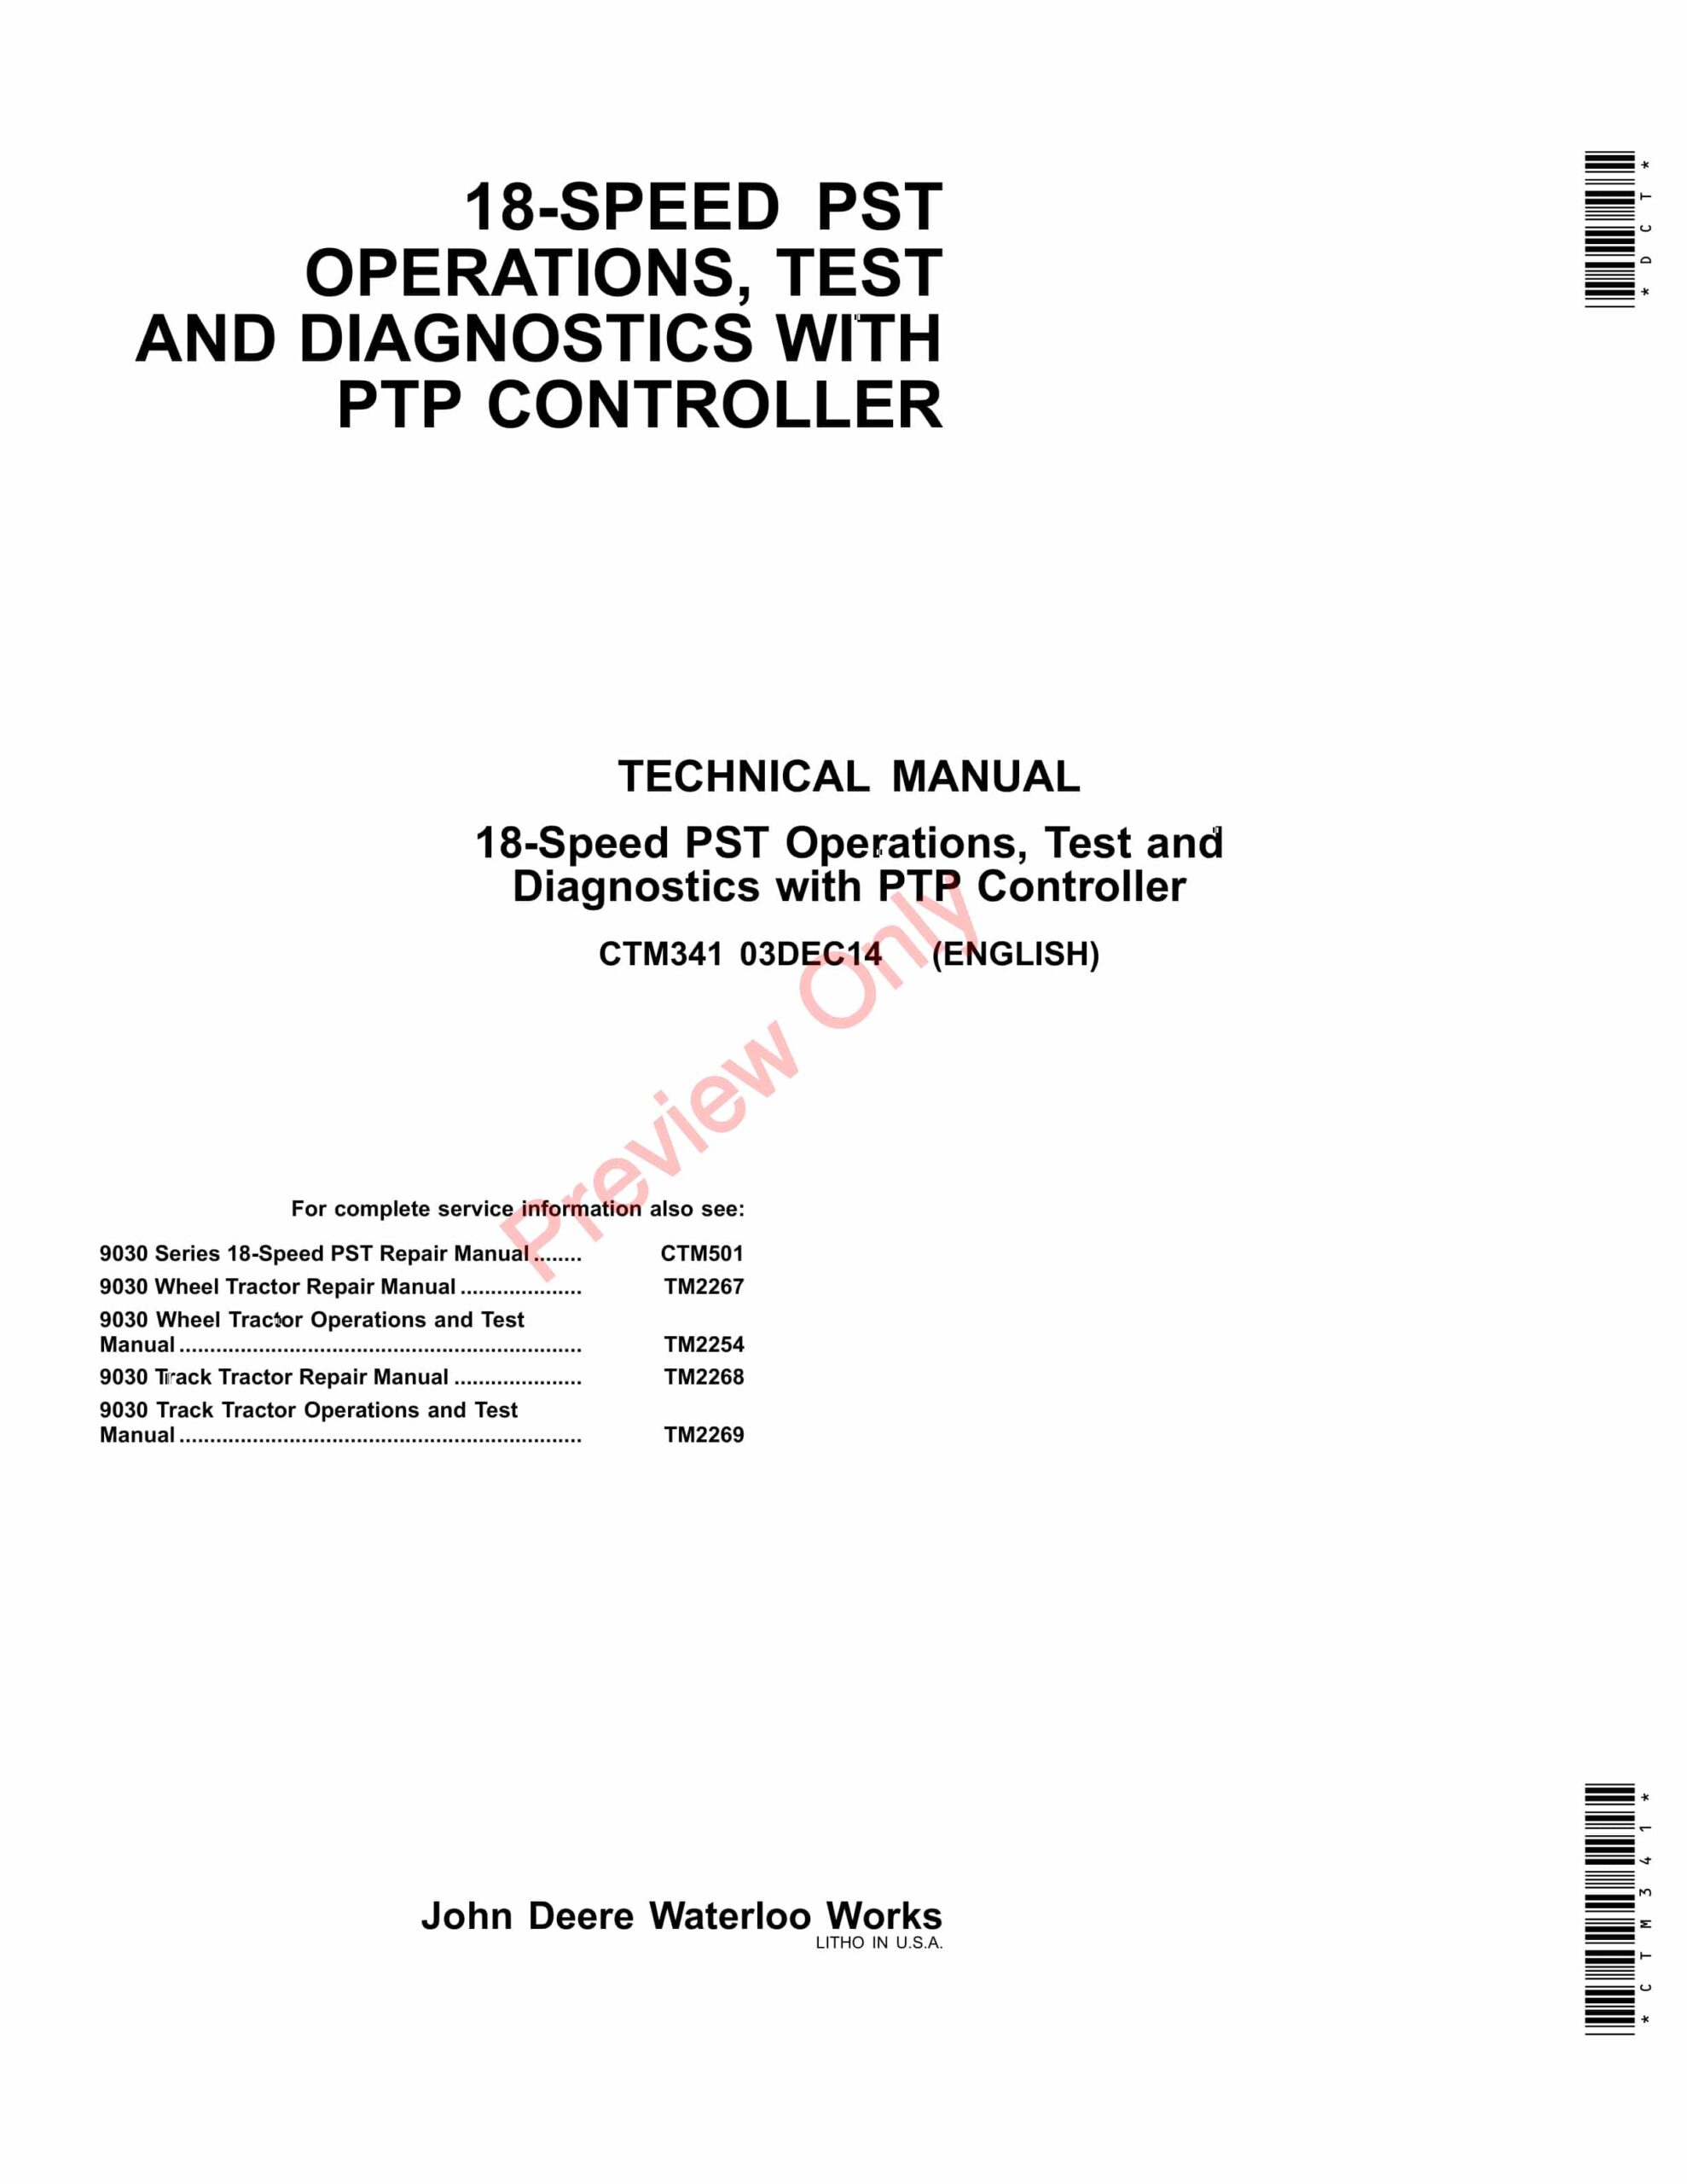 John Deere 18-Speed PST Operations, Text and Diagnostics w PTP Controller Service Information CTM341 03DEC14-1